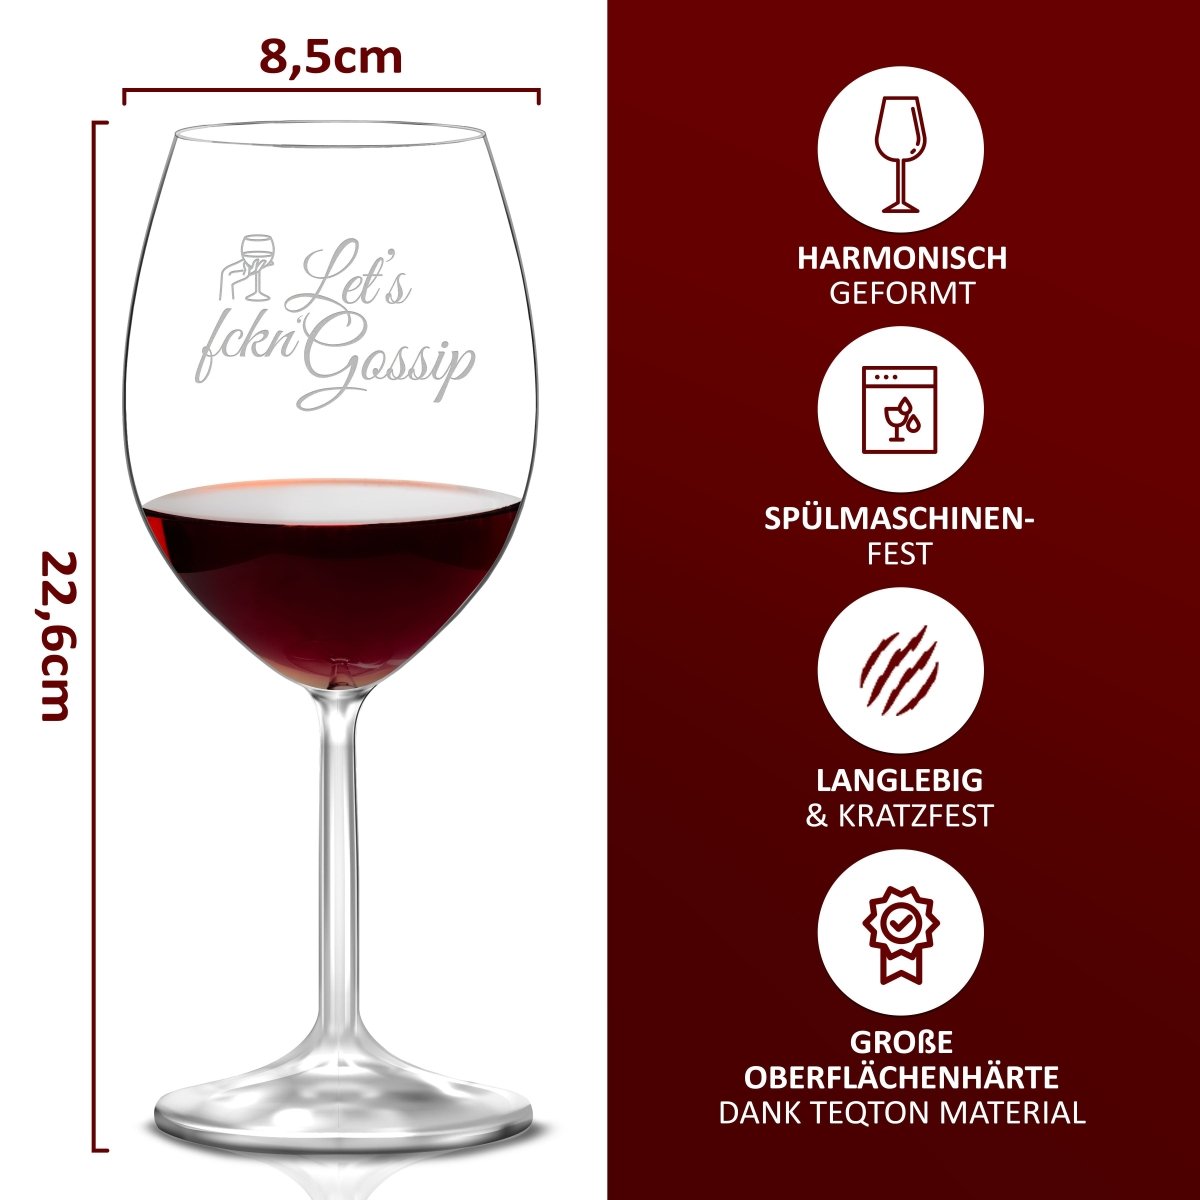 Weinglas mit Gravur | let's fuckin' gossip  - Leonardo